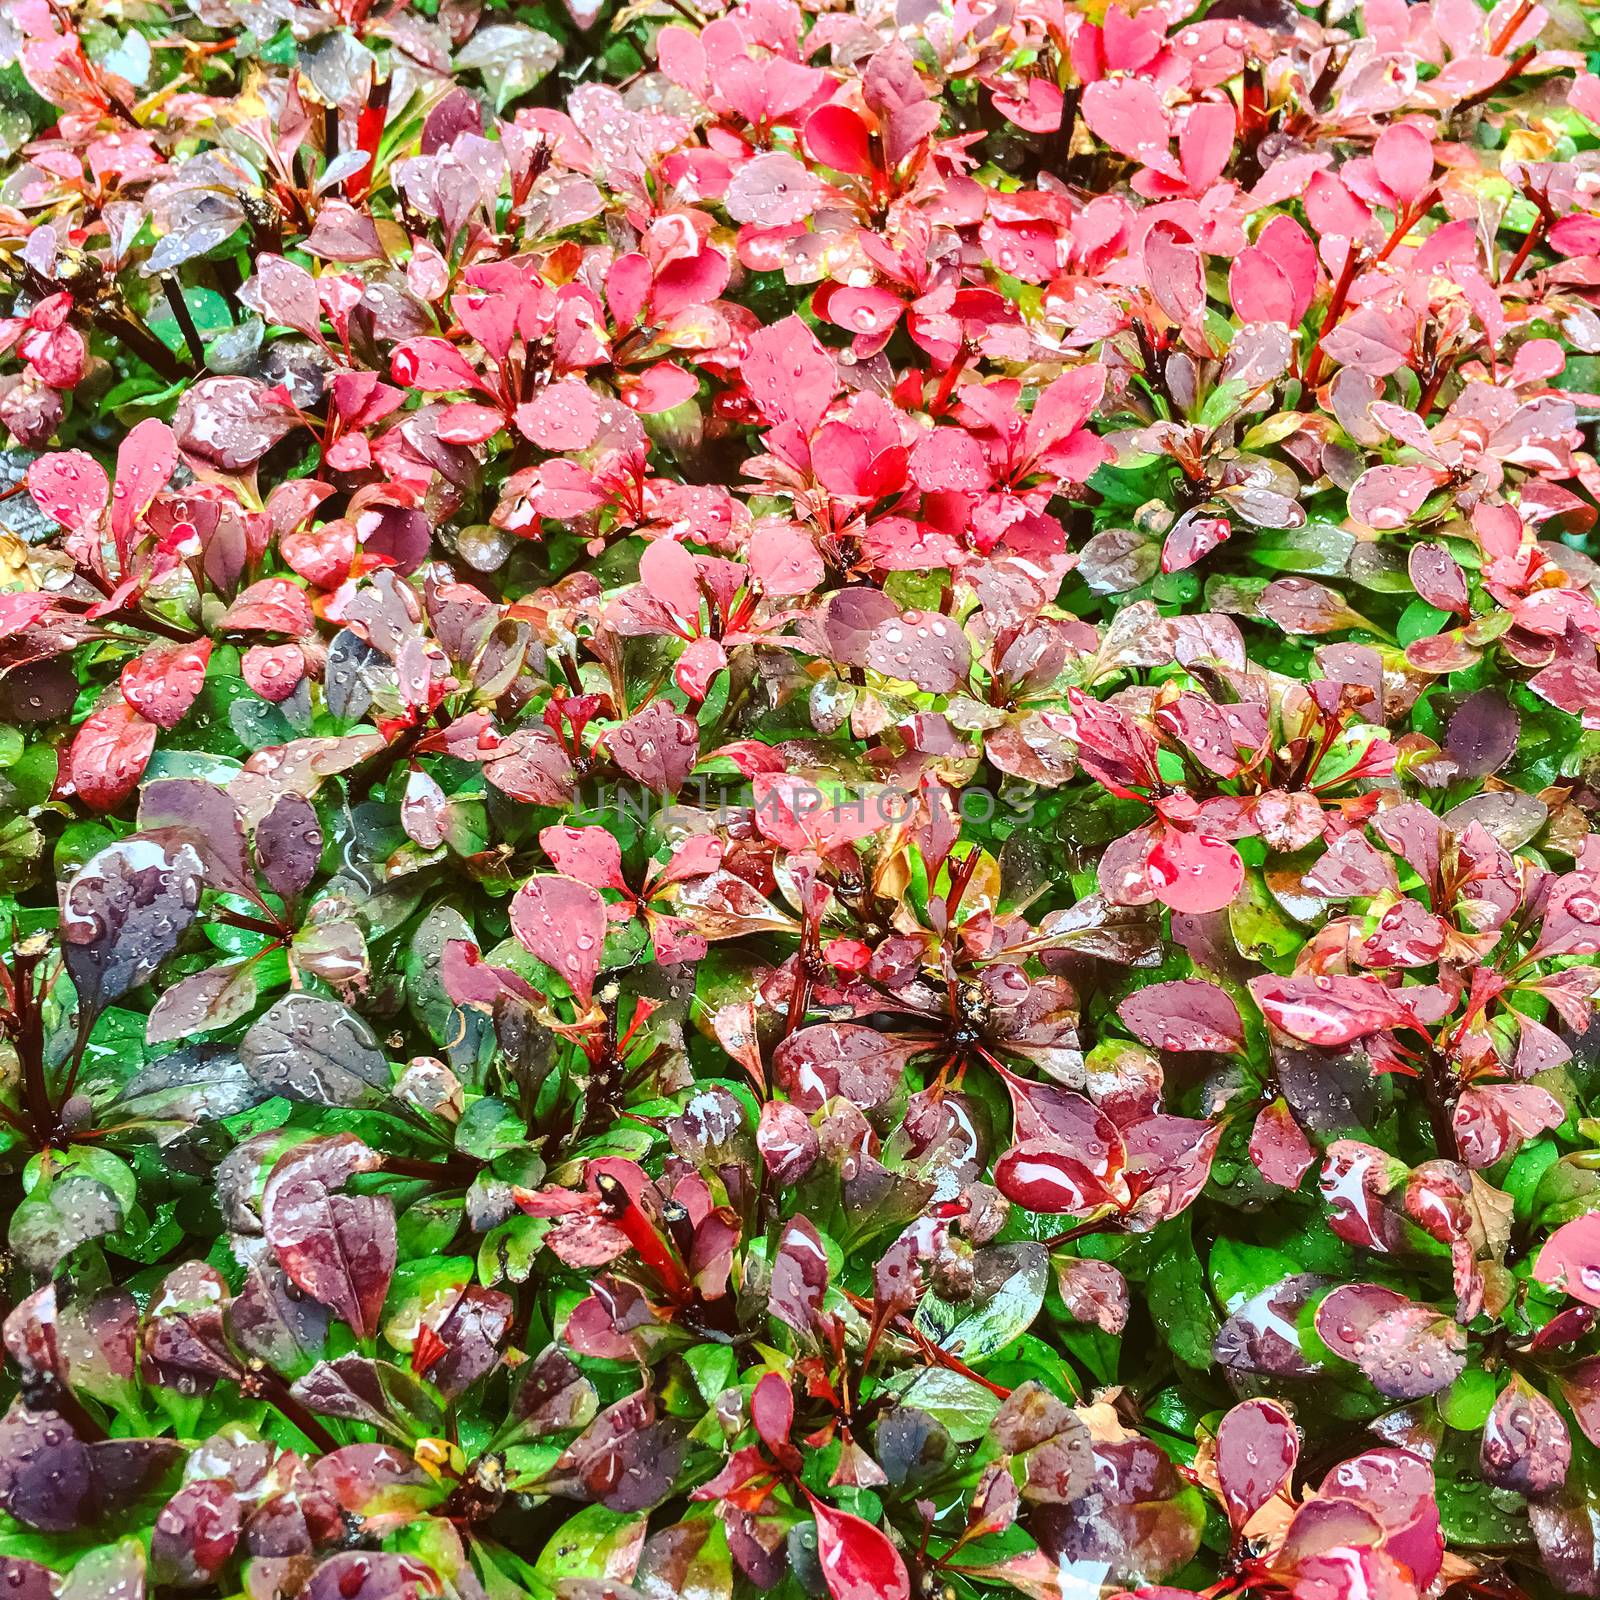 Colorful autumn bush in rain drops. Beautiful pink and green shades.